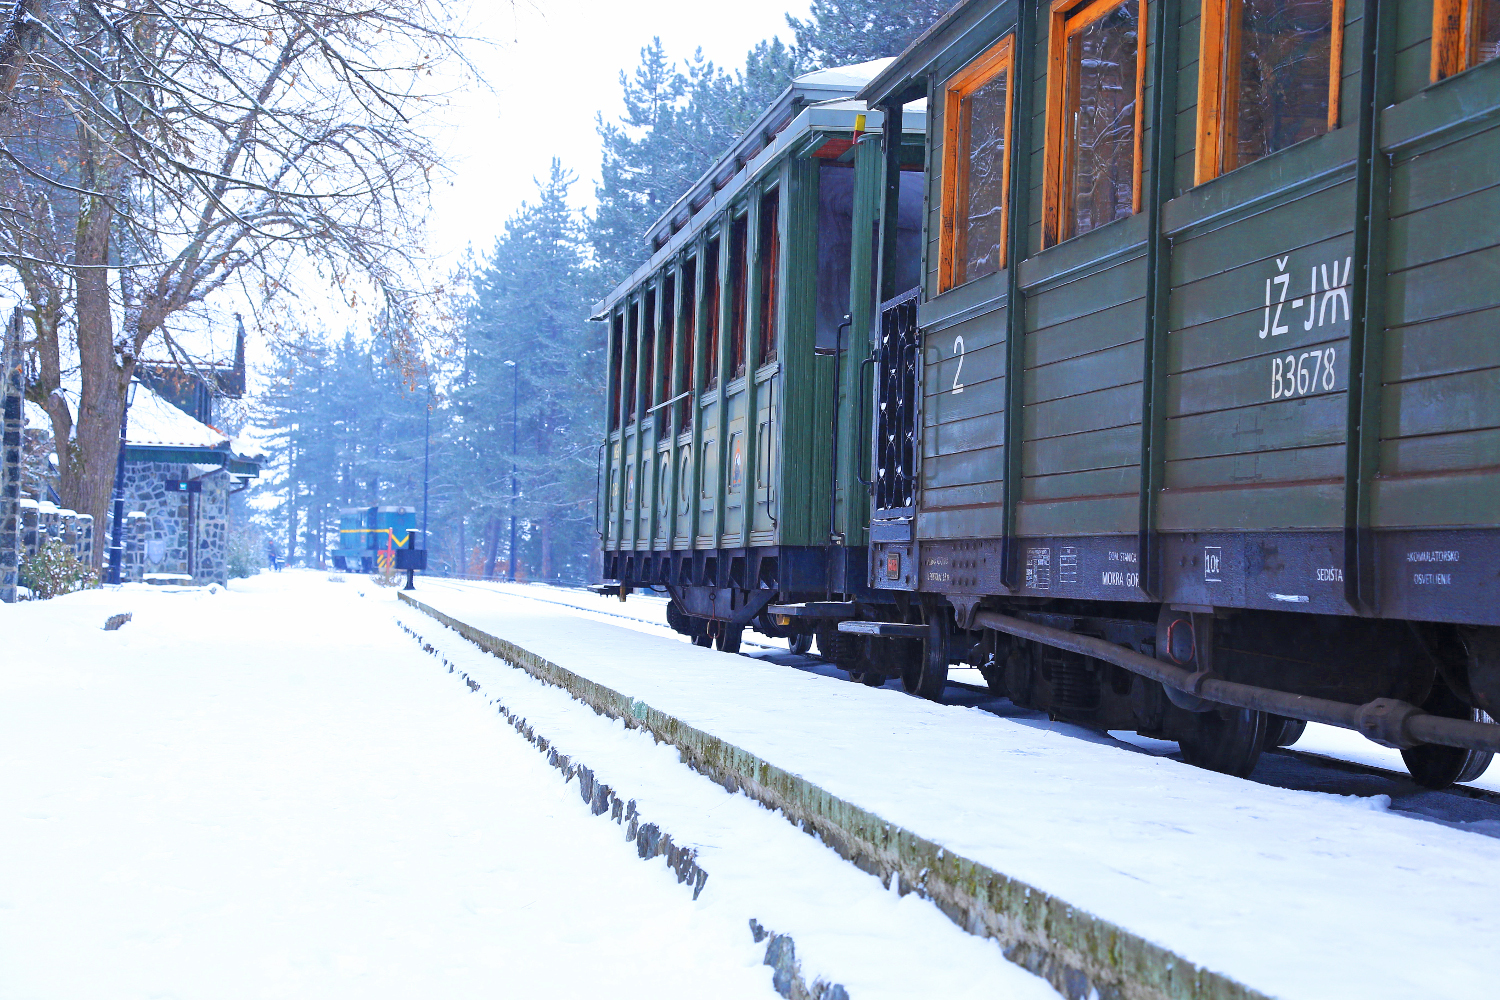 The Šargan Eight narrow-gauge heritage railway © Anisha Shah / Lonely Planet